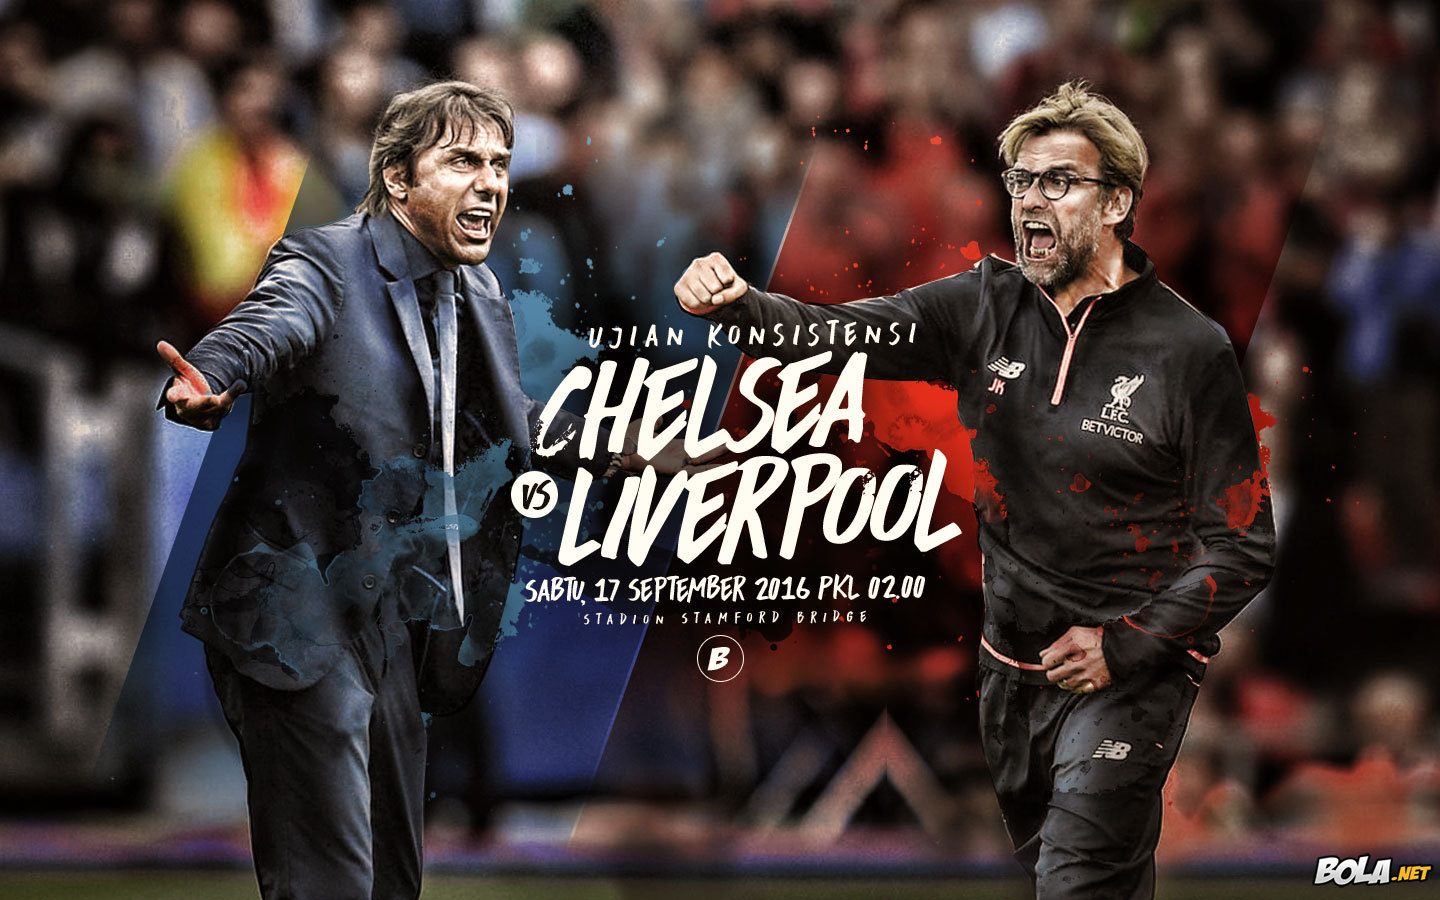 Deskripsi : Wallpaper Chelsea Vs Liverpool, size: 1440x900